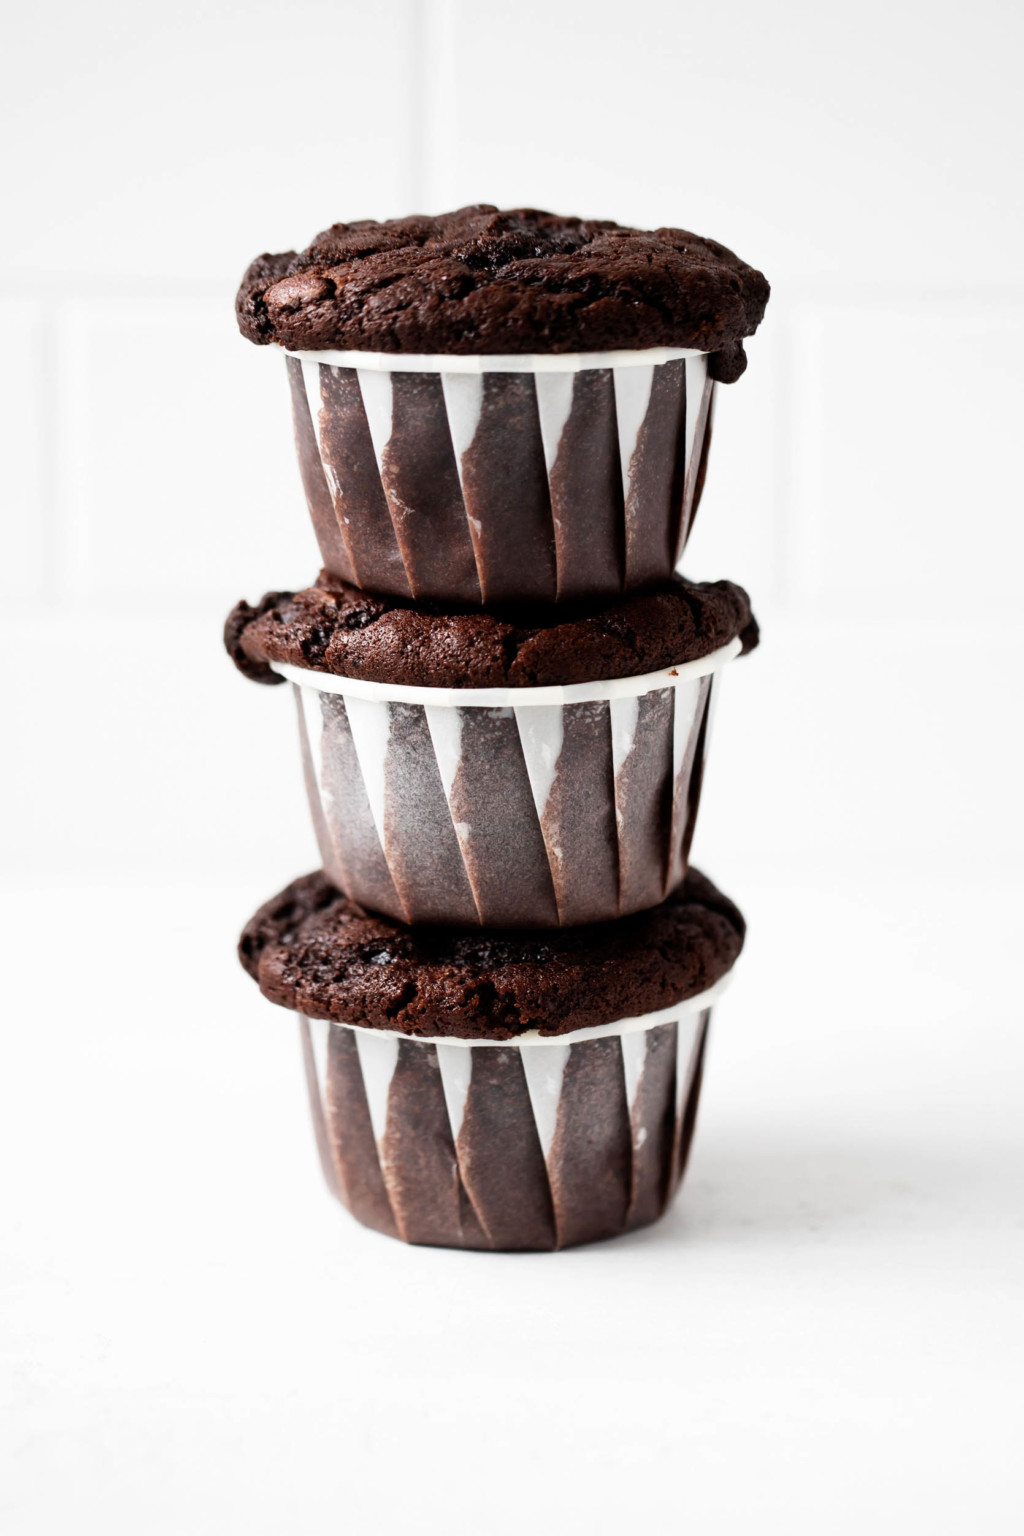 A vertical stack of freshly baked, dark brown muffins.